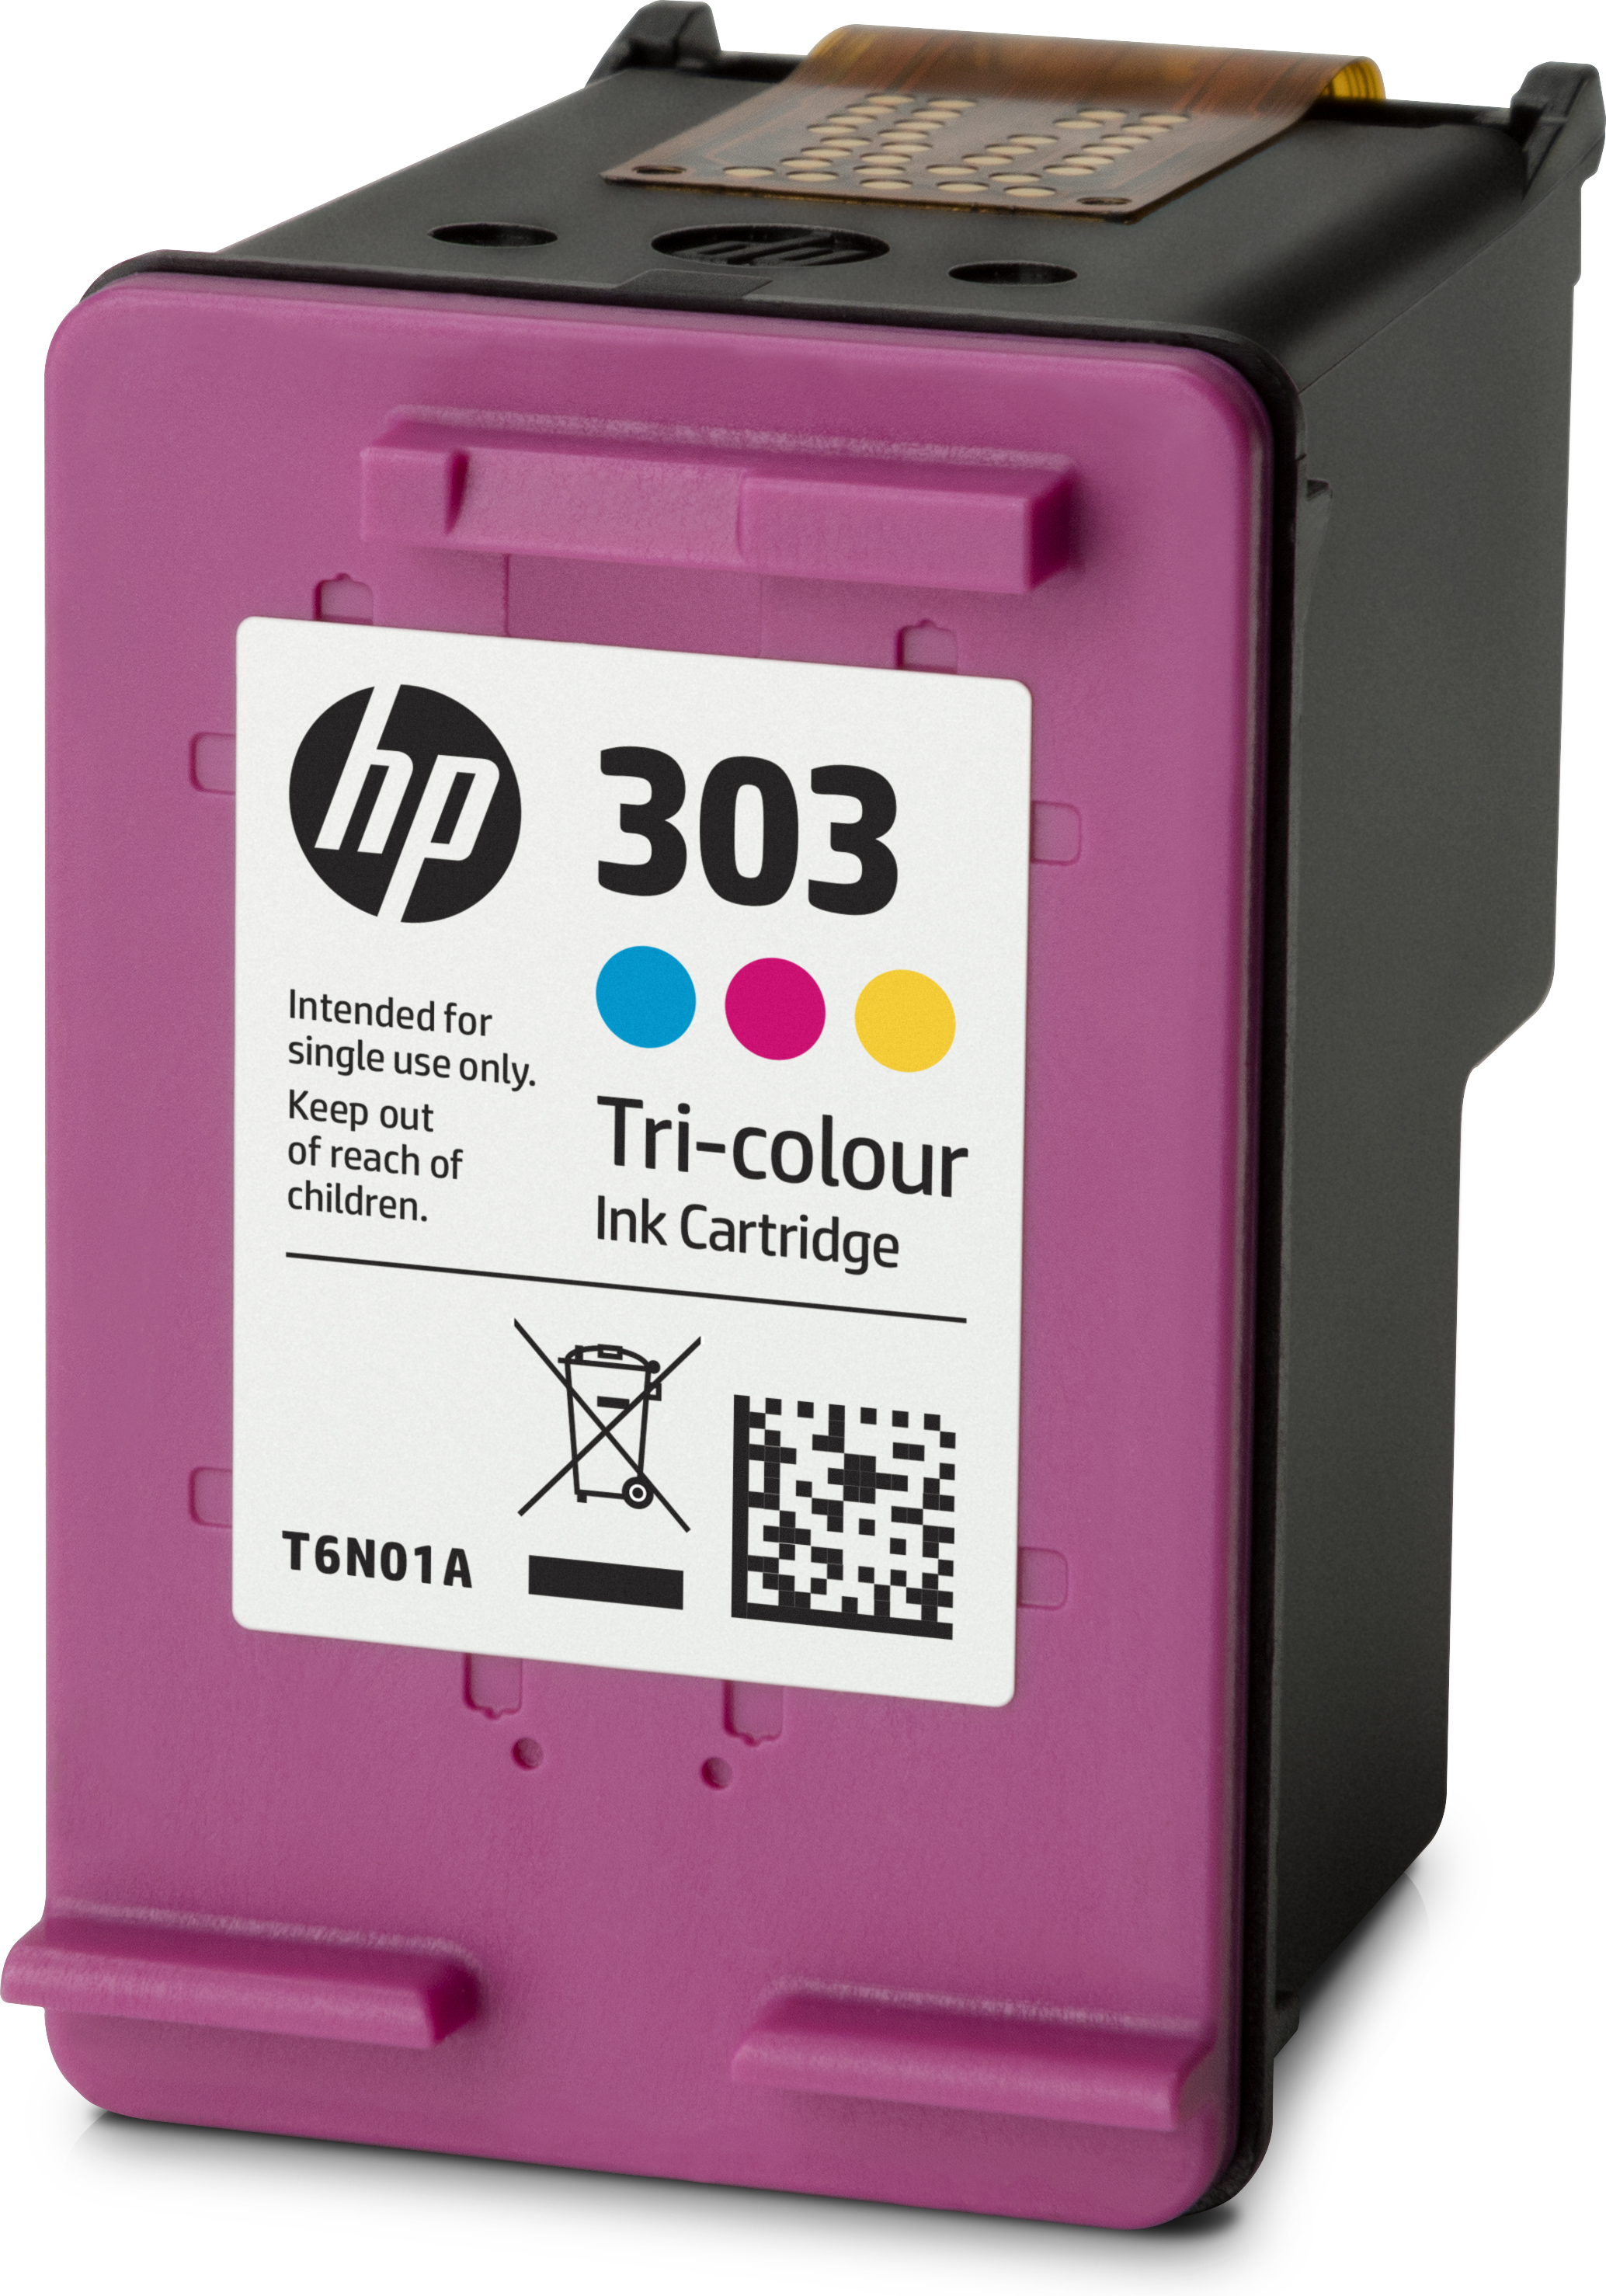 No303 tri-colour ink cartridge